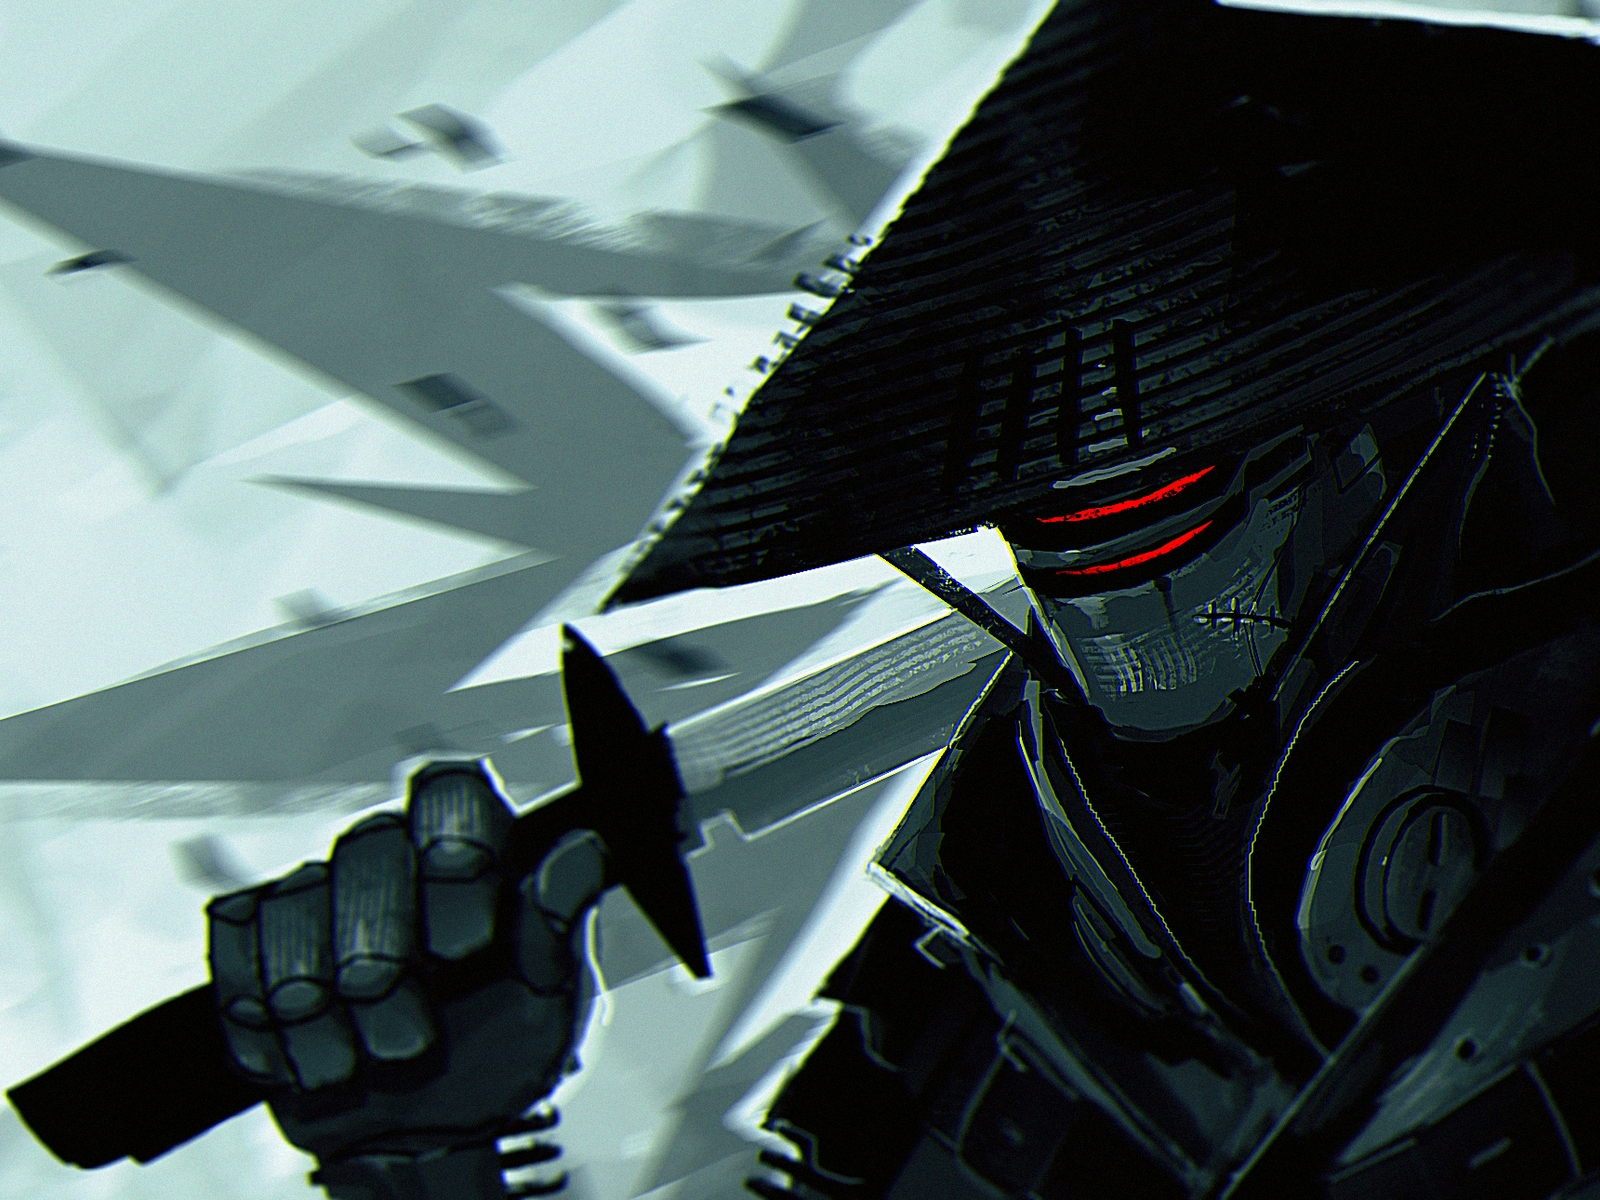 Image: Samurai, mask, headdress, sword, cyber